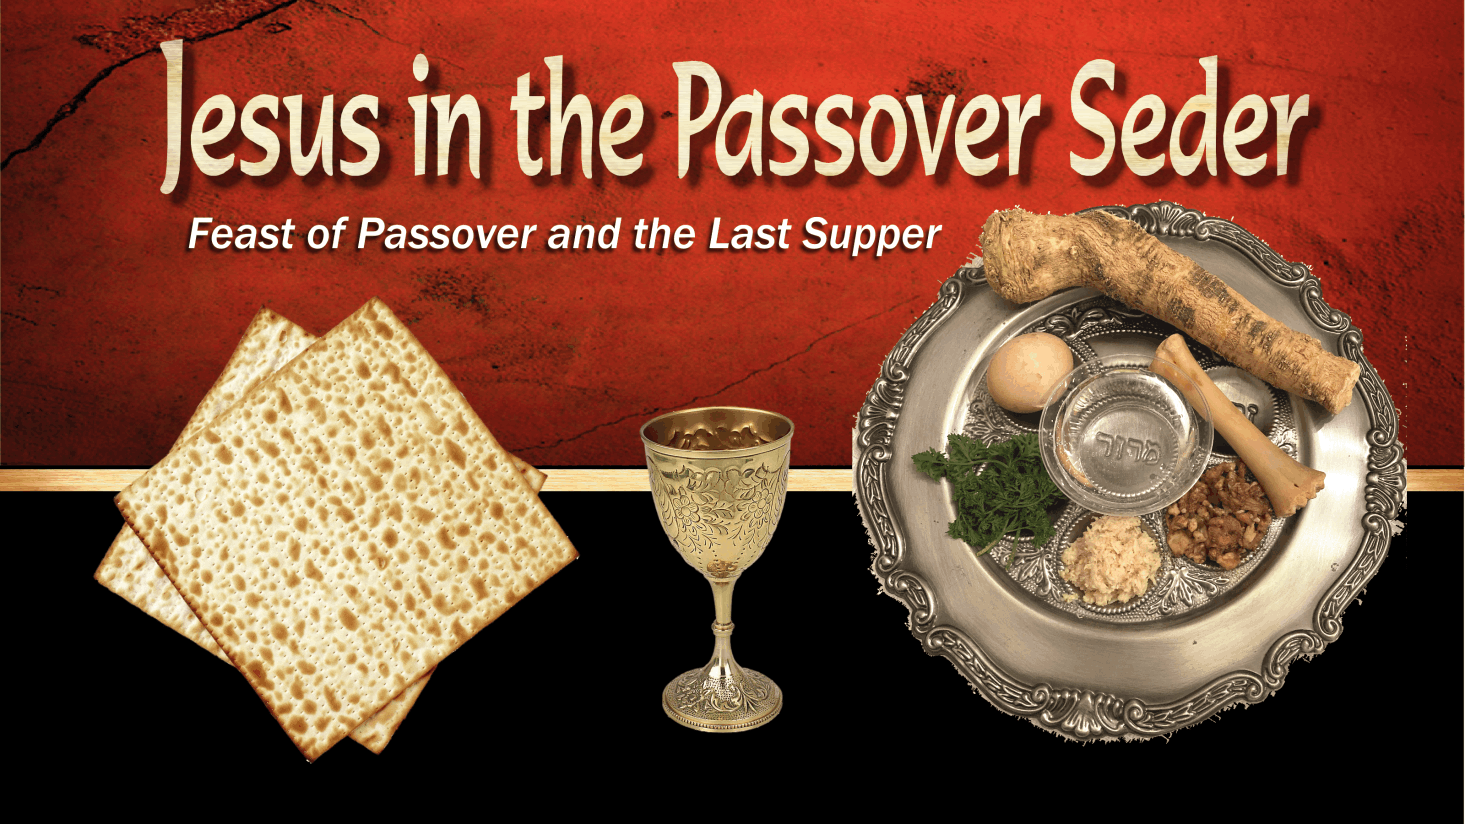 Jesus in the Passover Seder